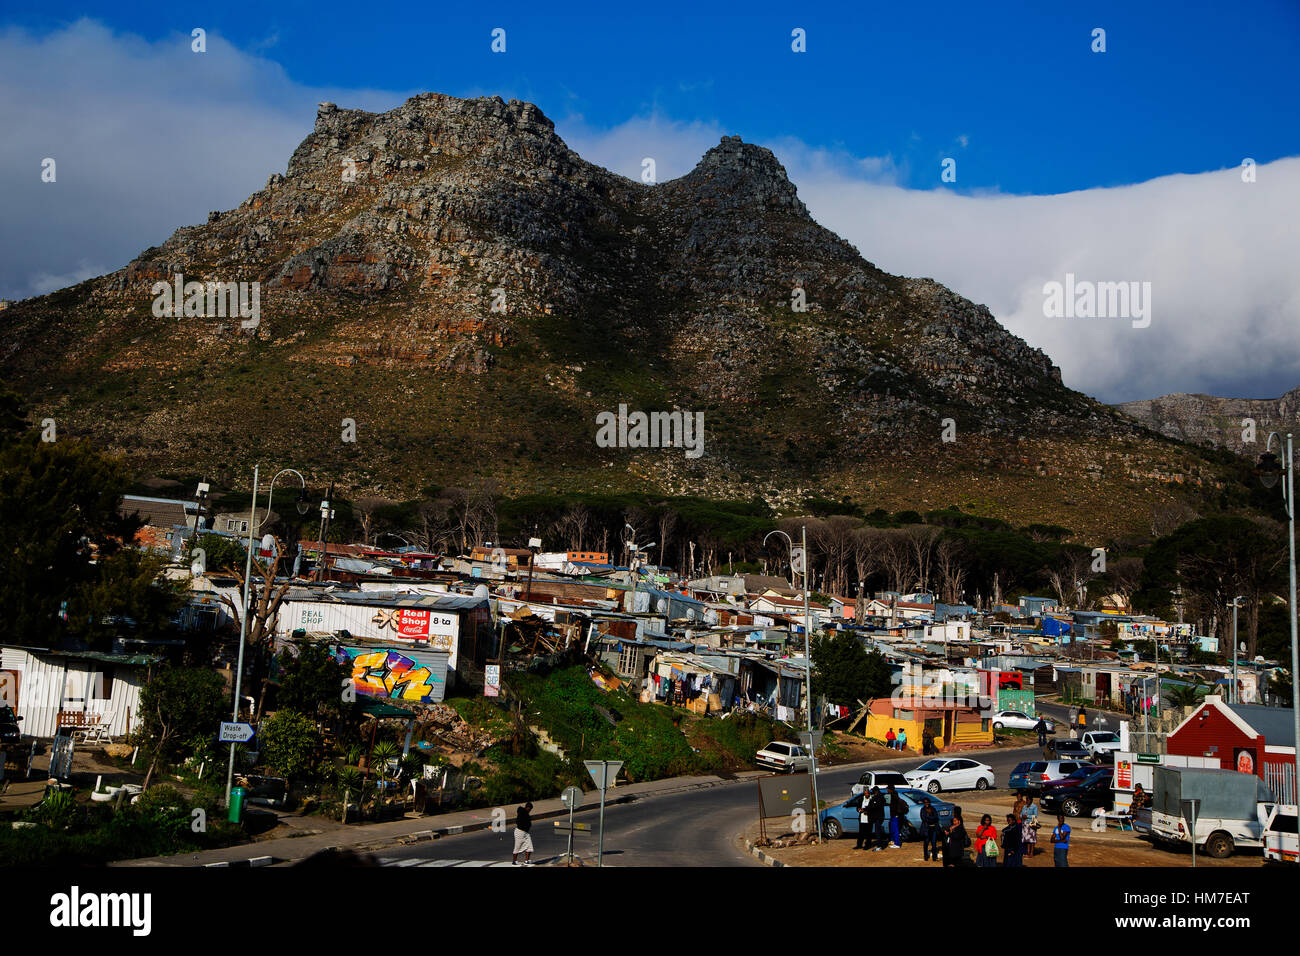 Baraccopoli sul Hout Bay periferia Imizamo Yethu township, Hout Bay, Città del Capo, Sud Africa Foto Stock